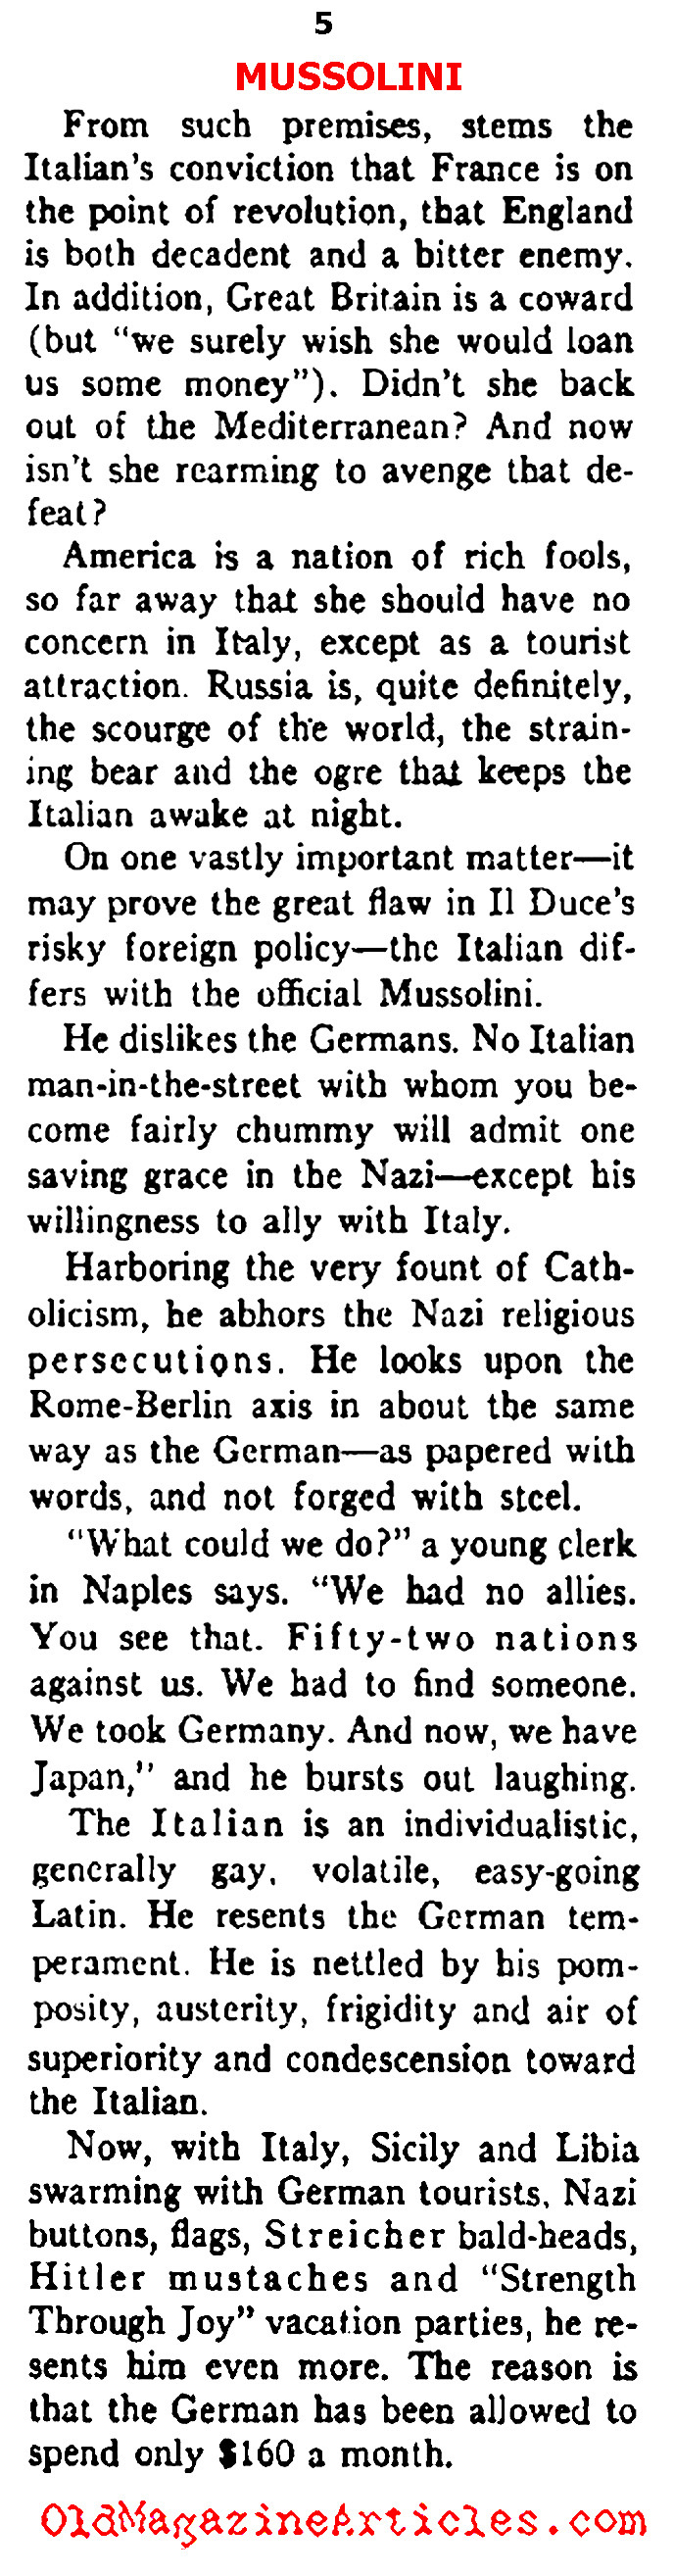 Life in Sunny, Fascist Italy (Ken Magazine, 1938)